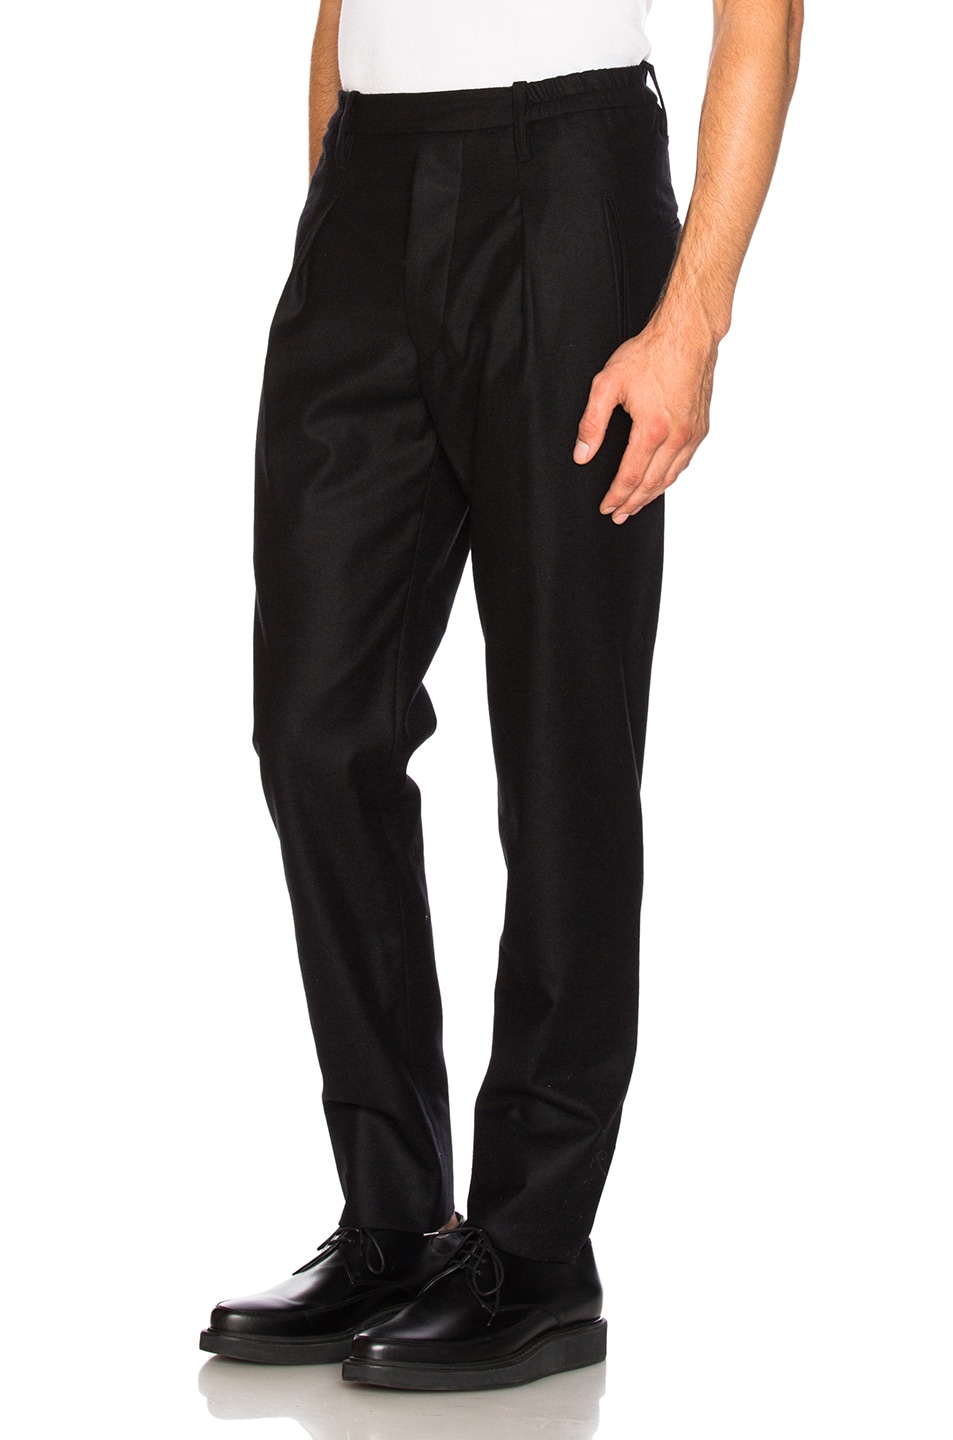 Lemaire Elasticated Pants in Black | FWRD